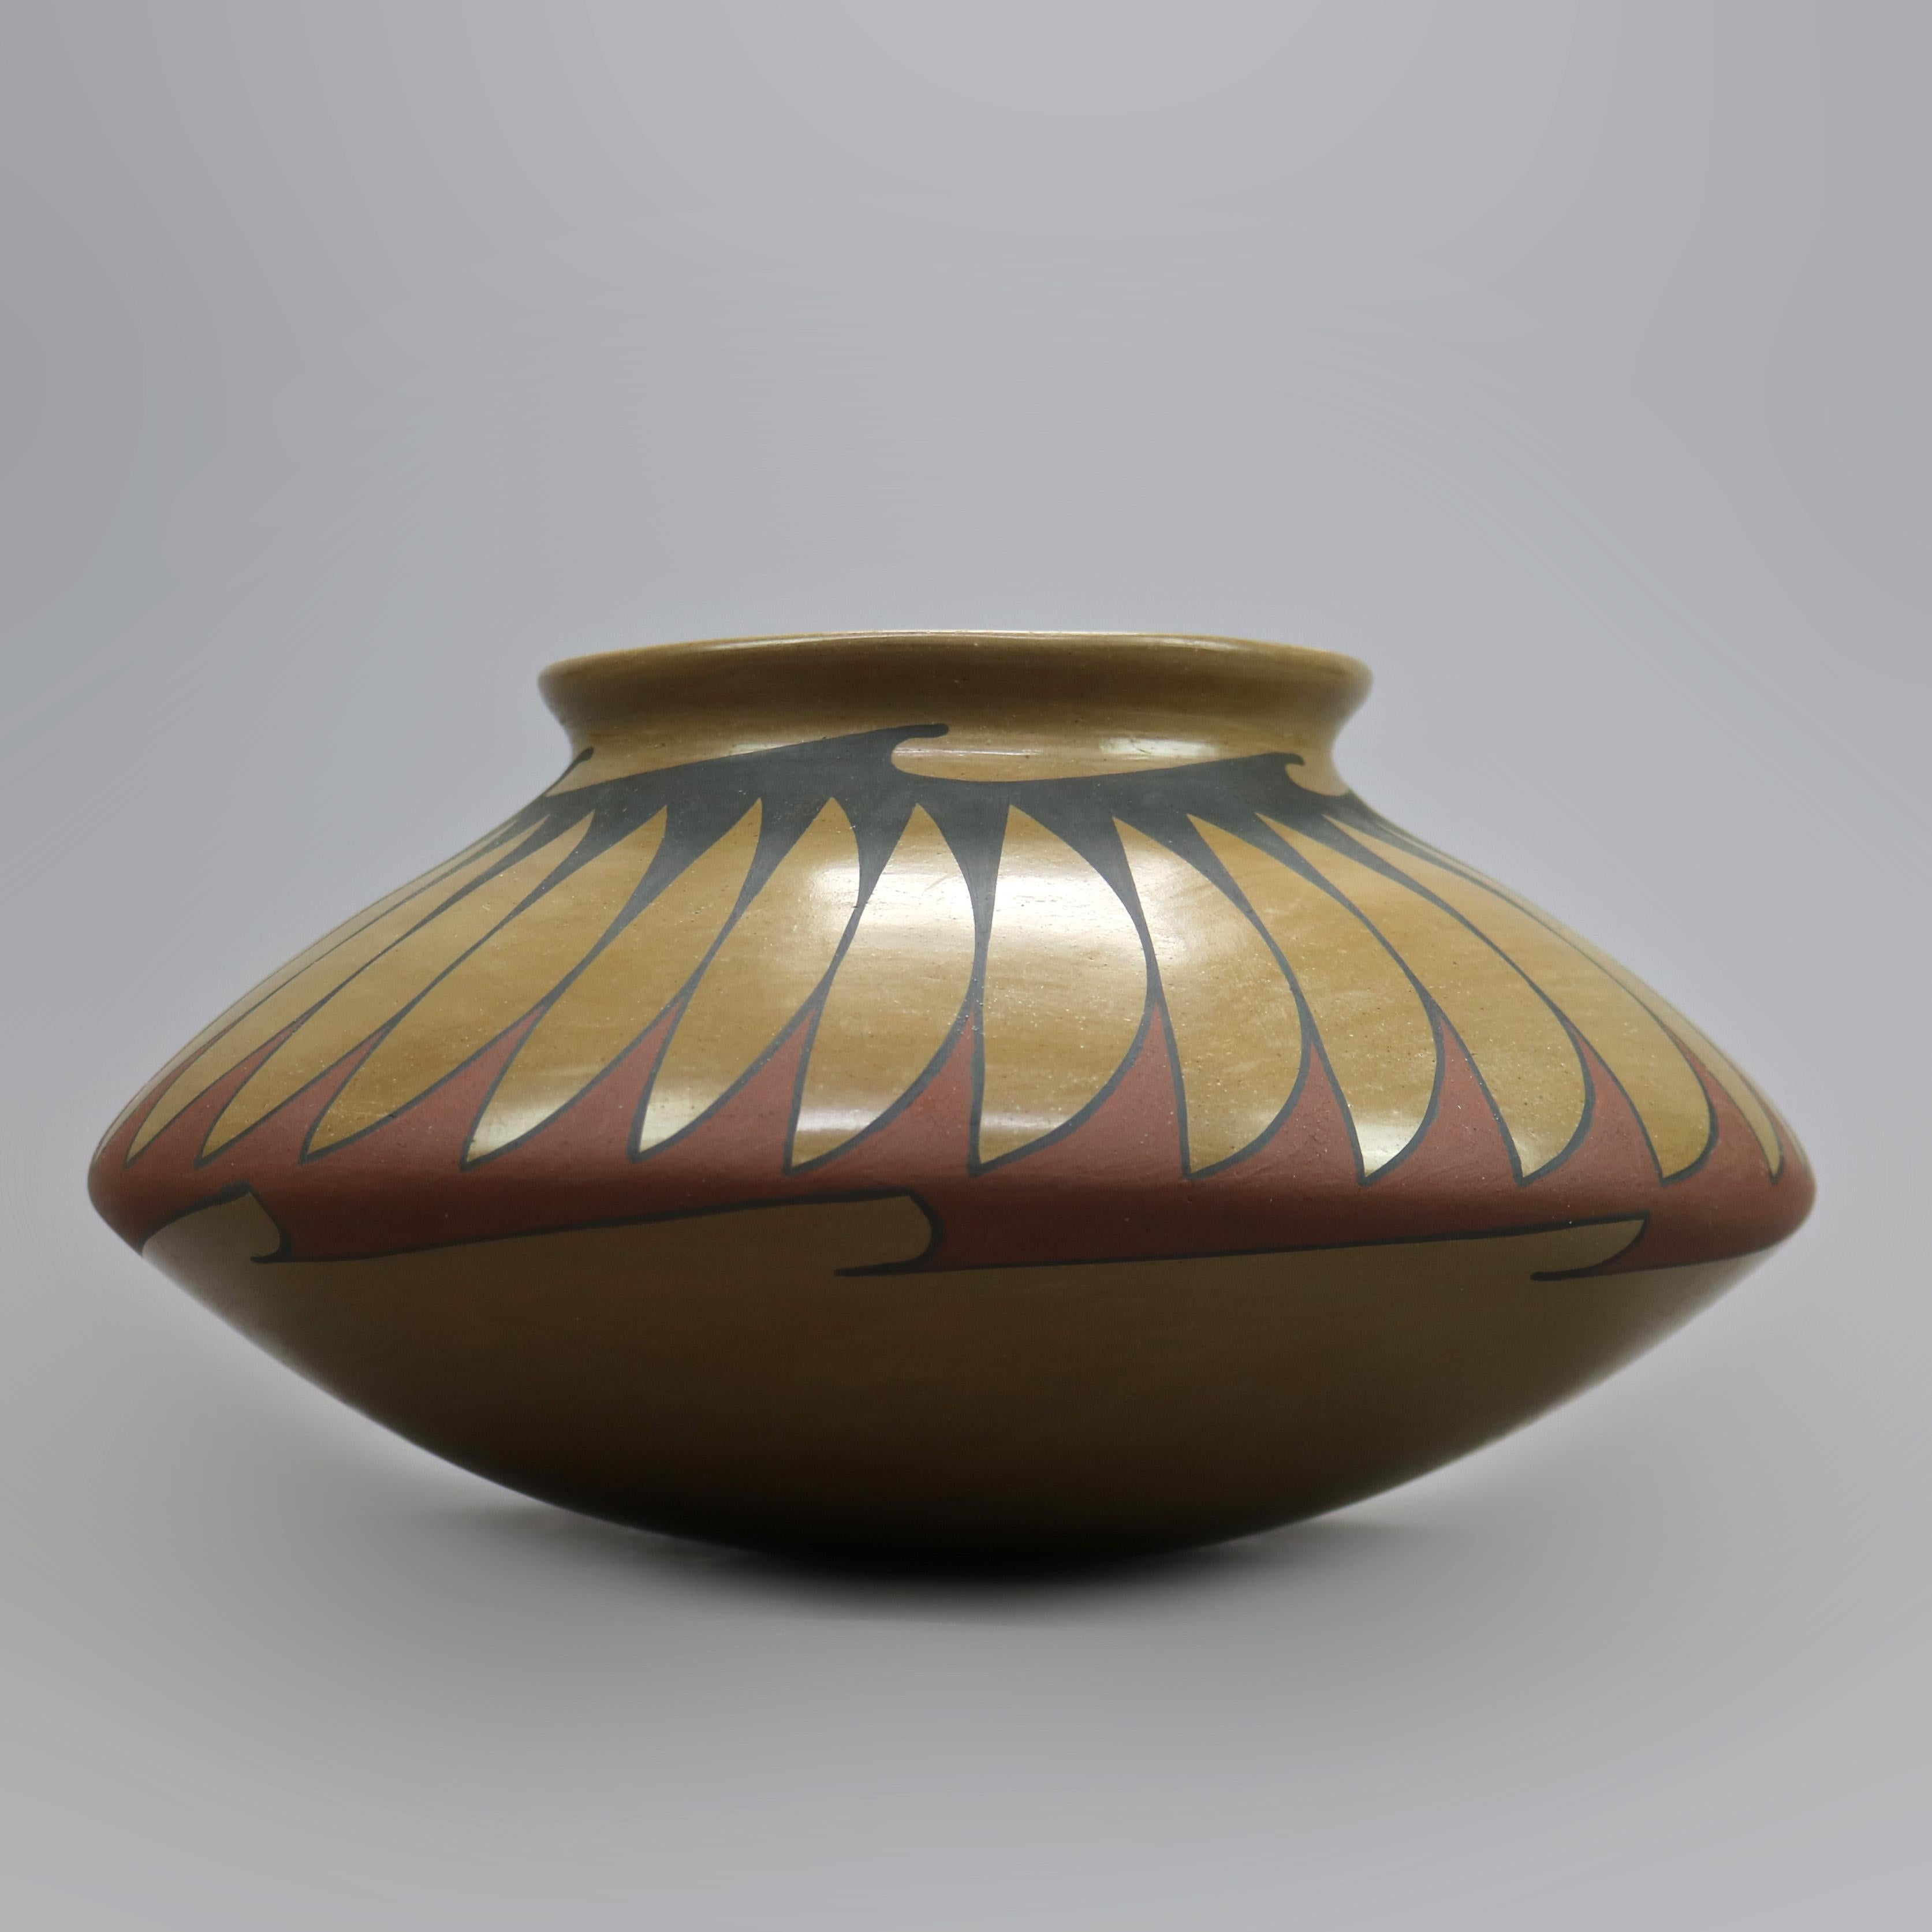 American Antique Mata Ortiz Pottery Vase by R. Silveira, Mexico, 1930s